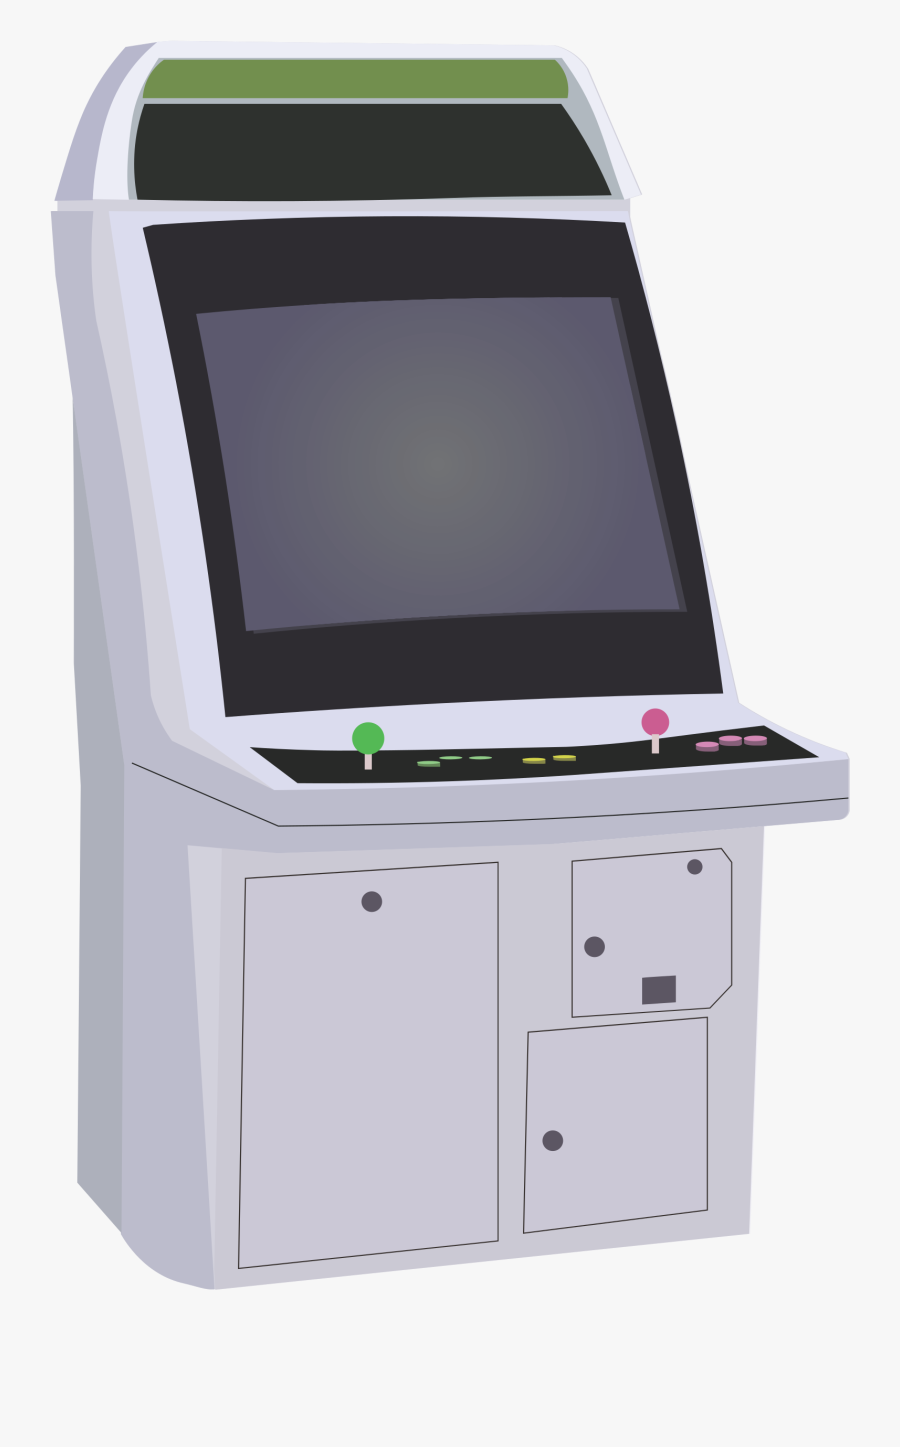 Arcade Video Game Machine - Video Game Arcade Png, Transparent Clipart